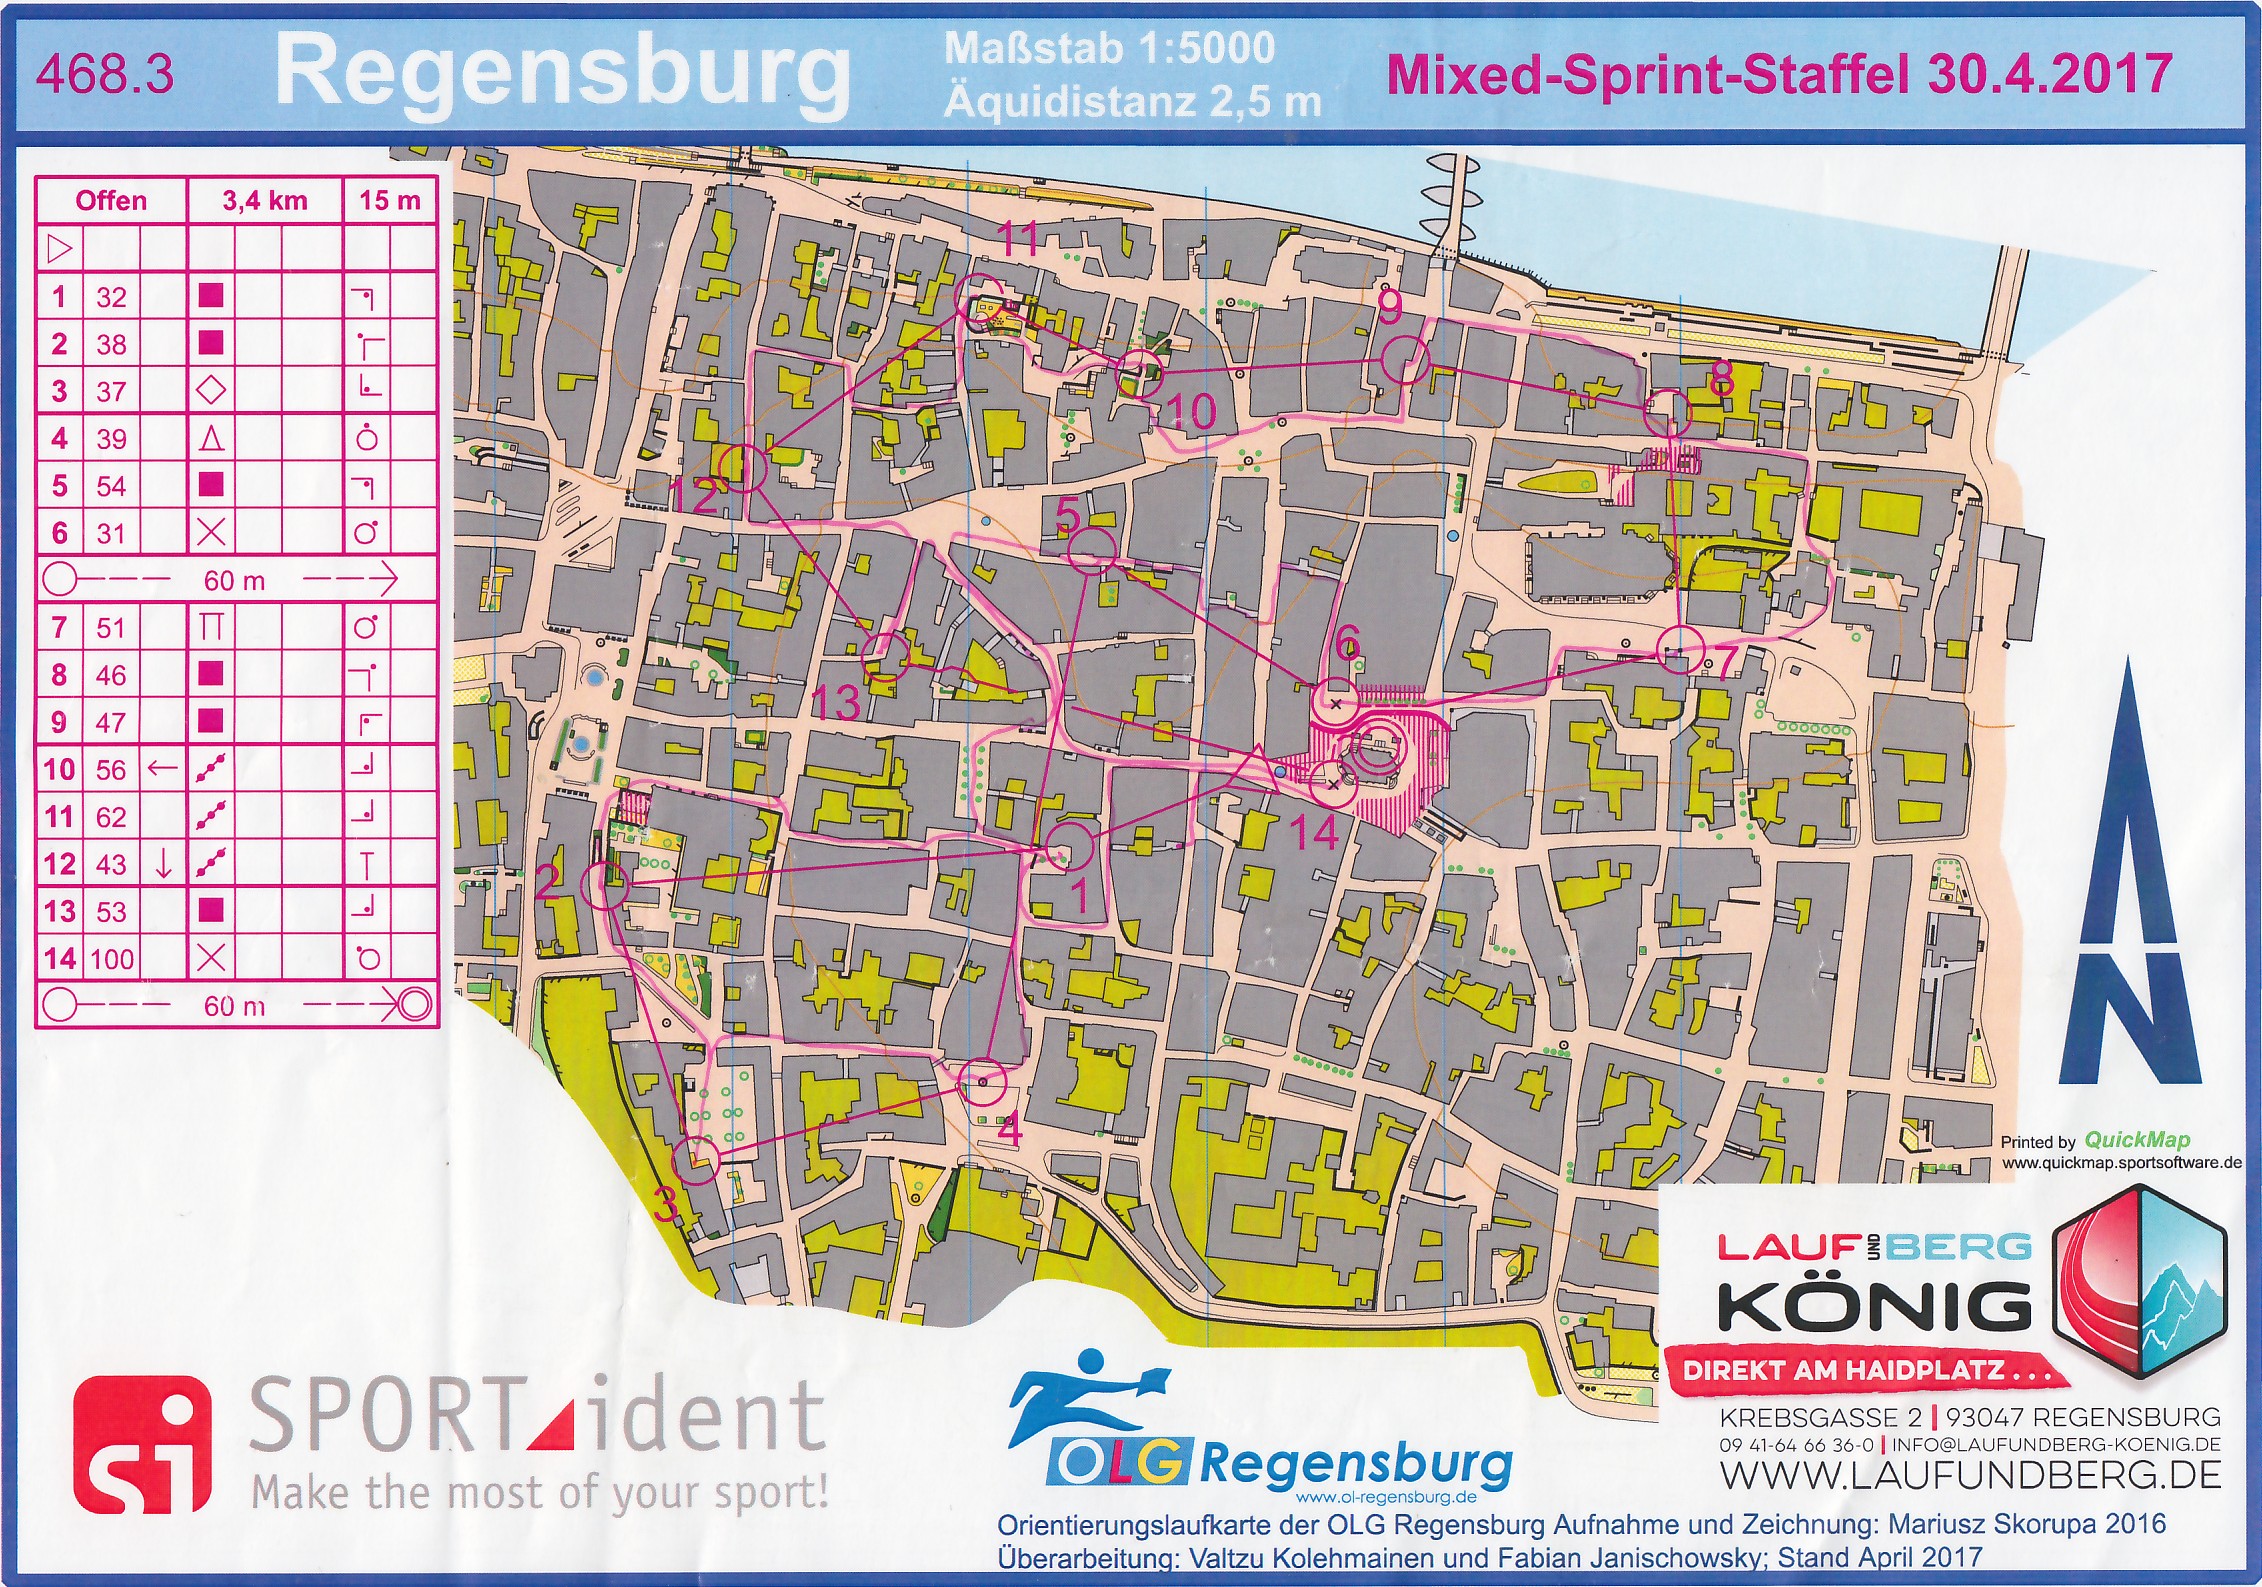 Sprint-Staffel in Regensburg (30-04-2017)